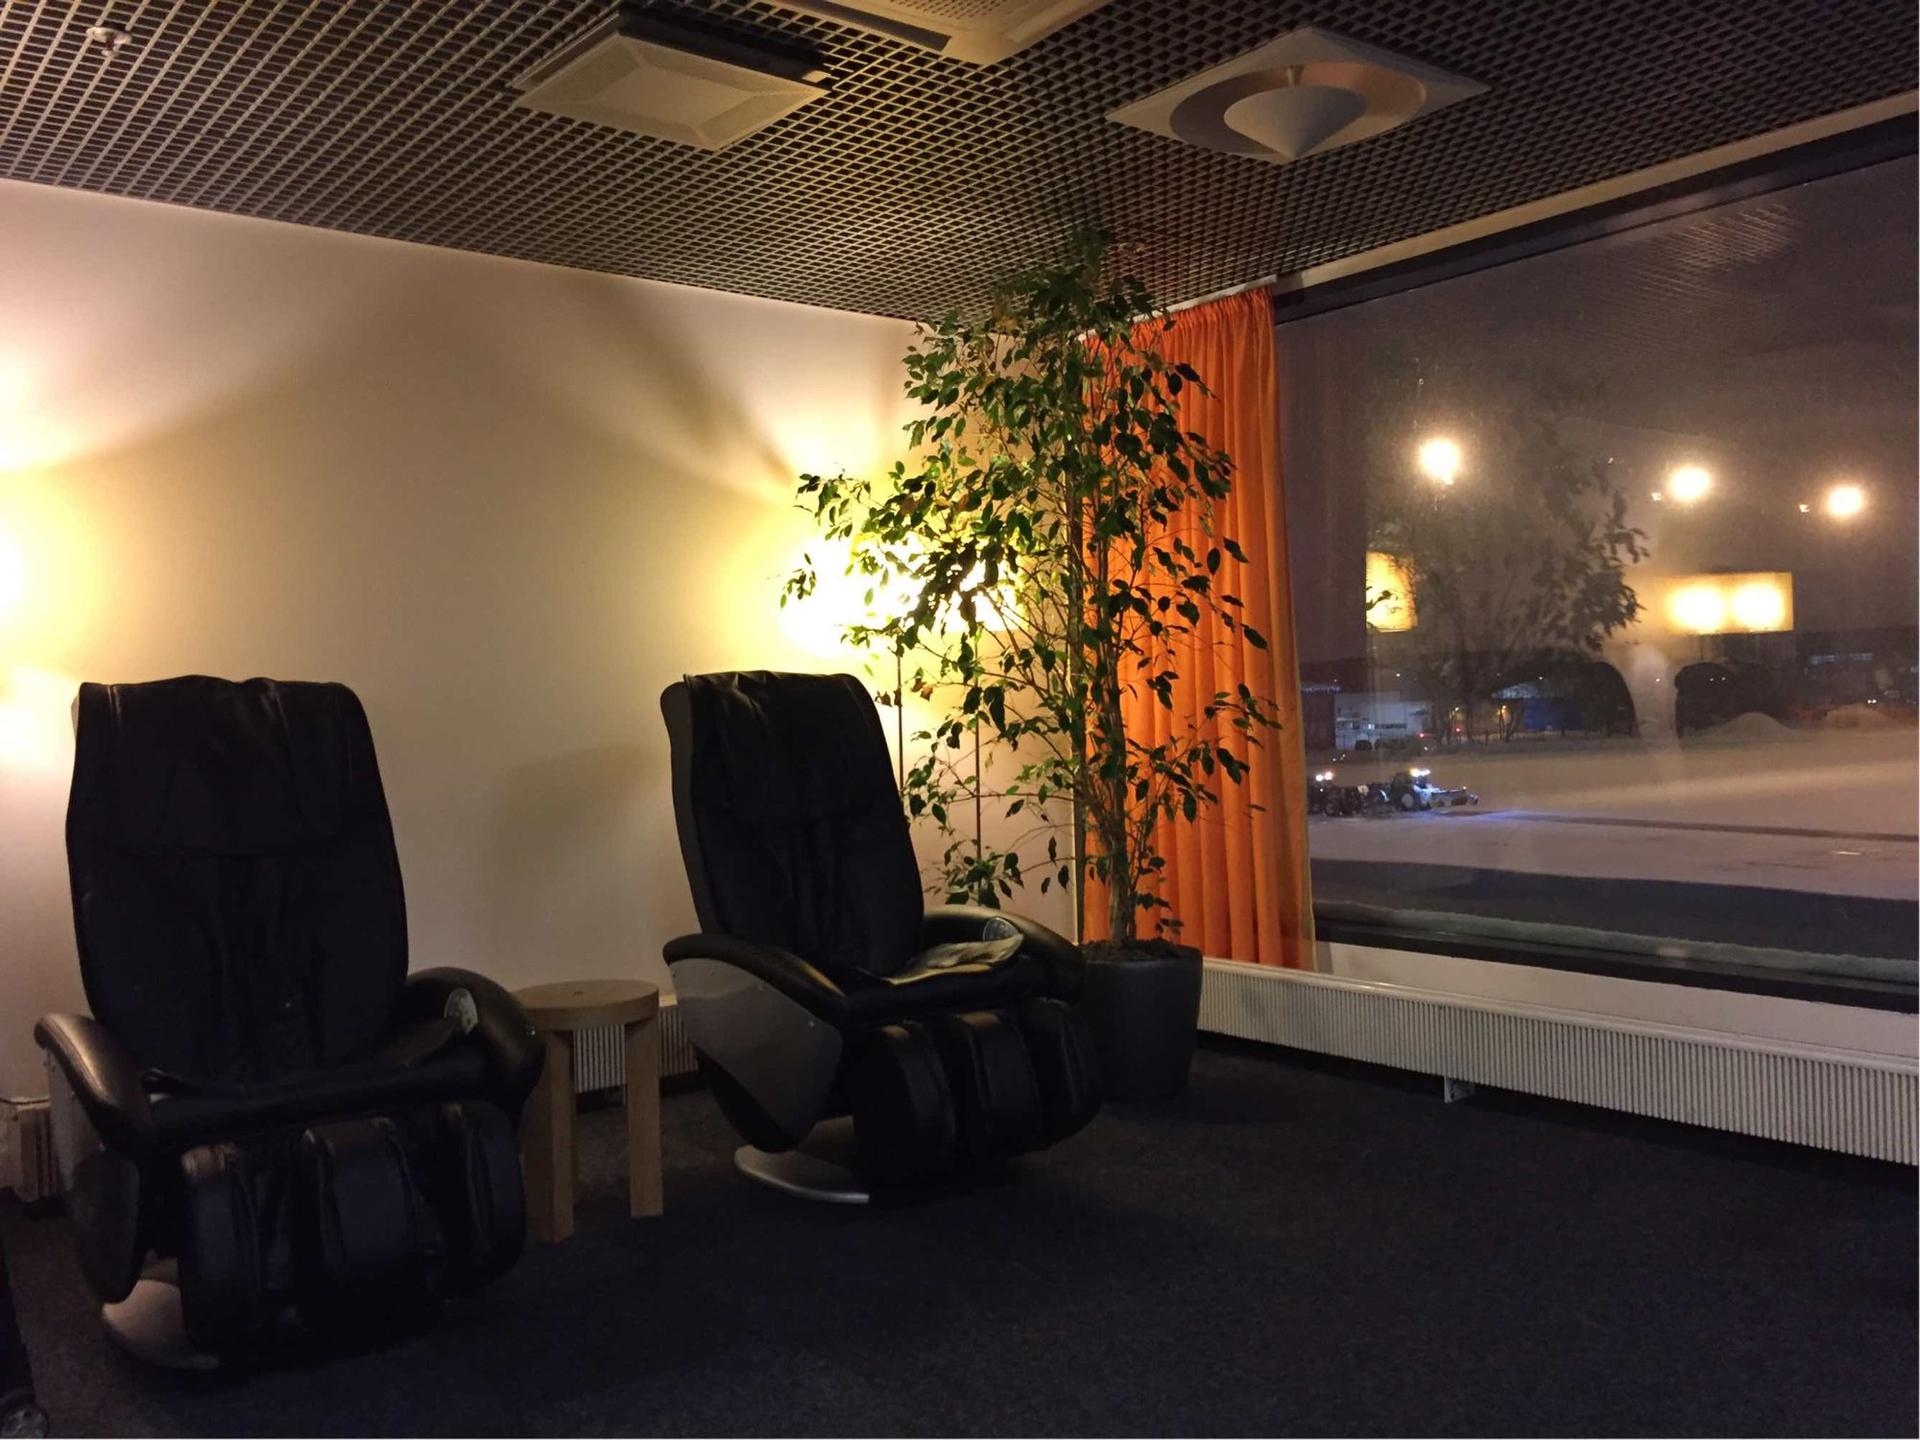 Tallinn Airport LHV Lounge image 6 of 20